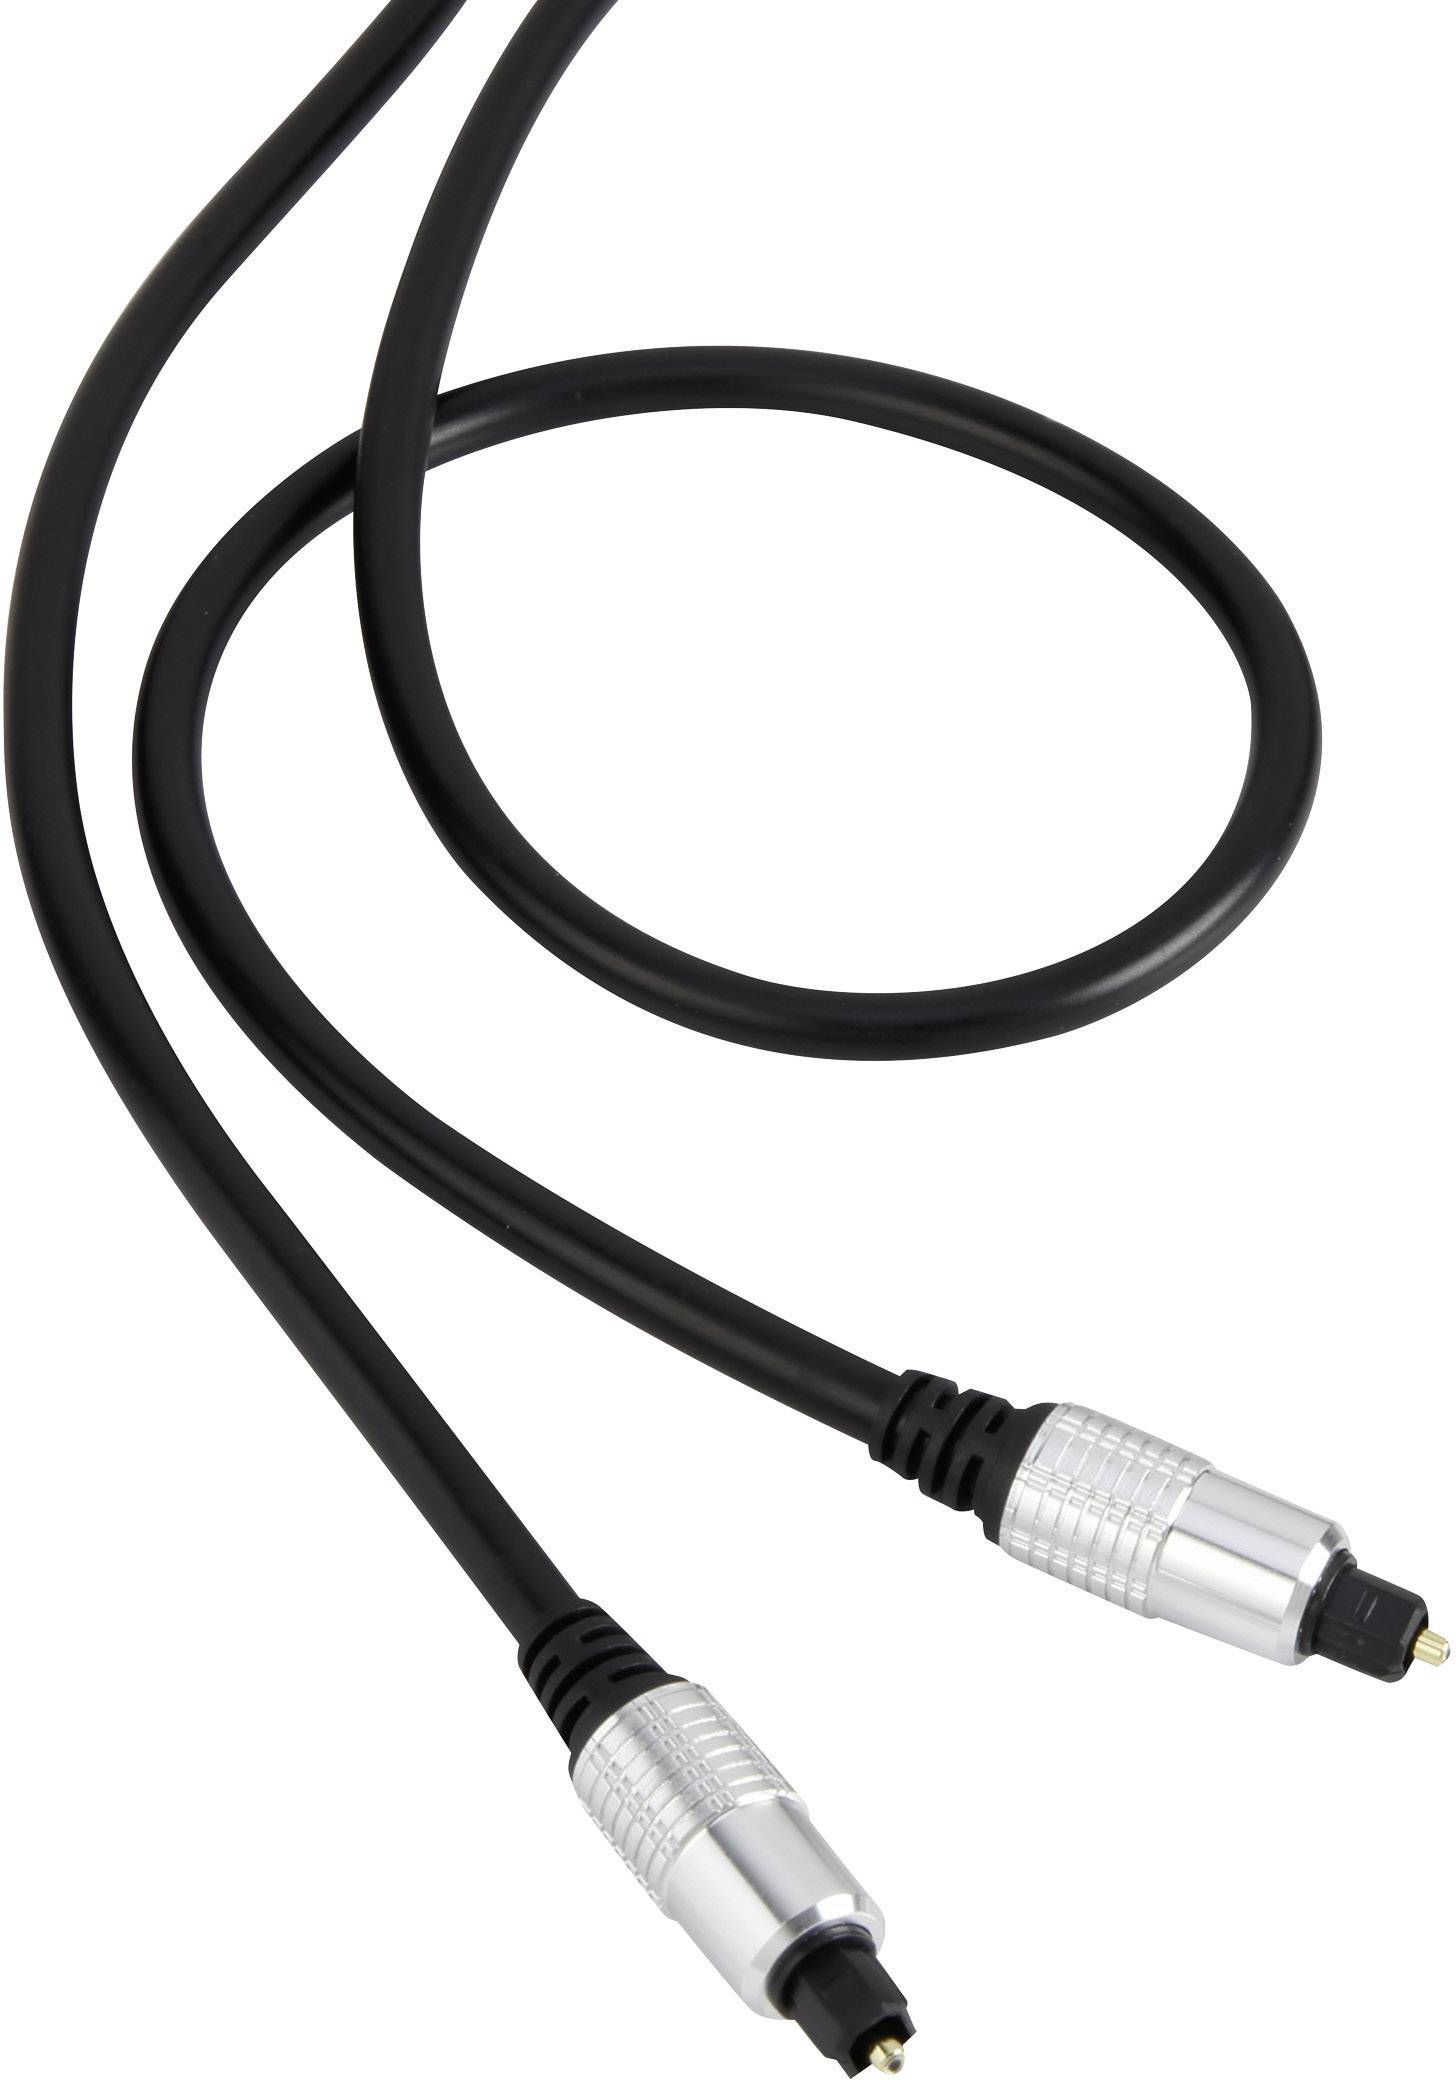 CONRAD Toslink Digital-Audio Anschlusskabel [1x Toslink-Stecker (ODT) - 1x Toslink-Stecker (ODT)] 1.